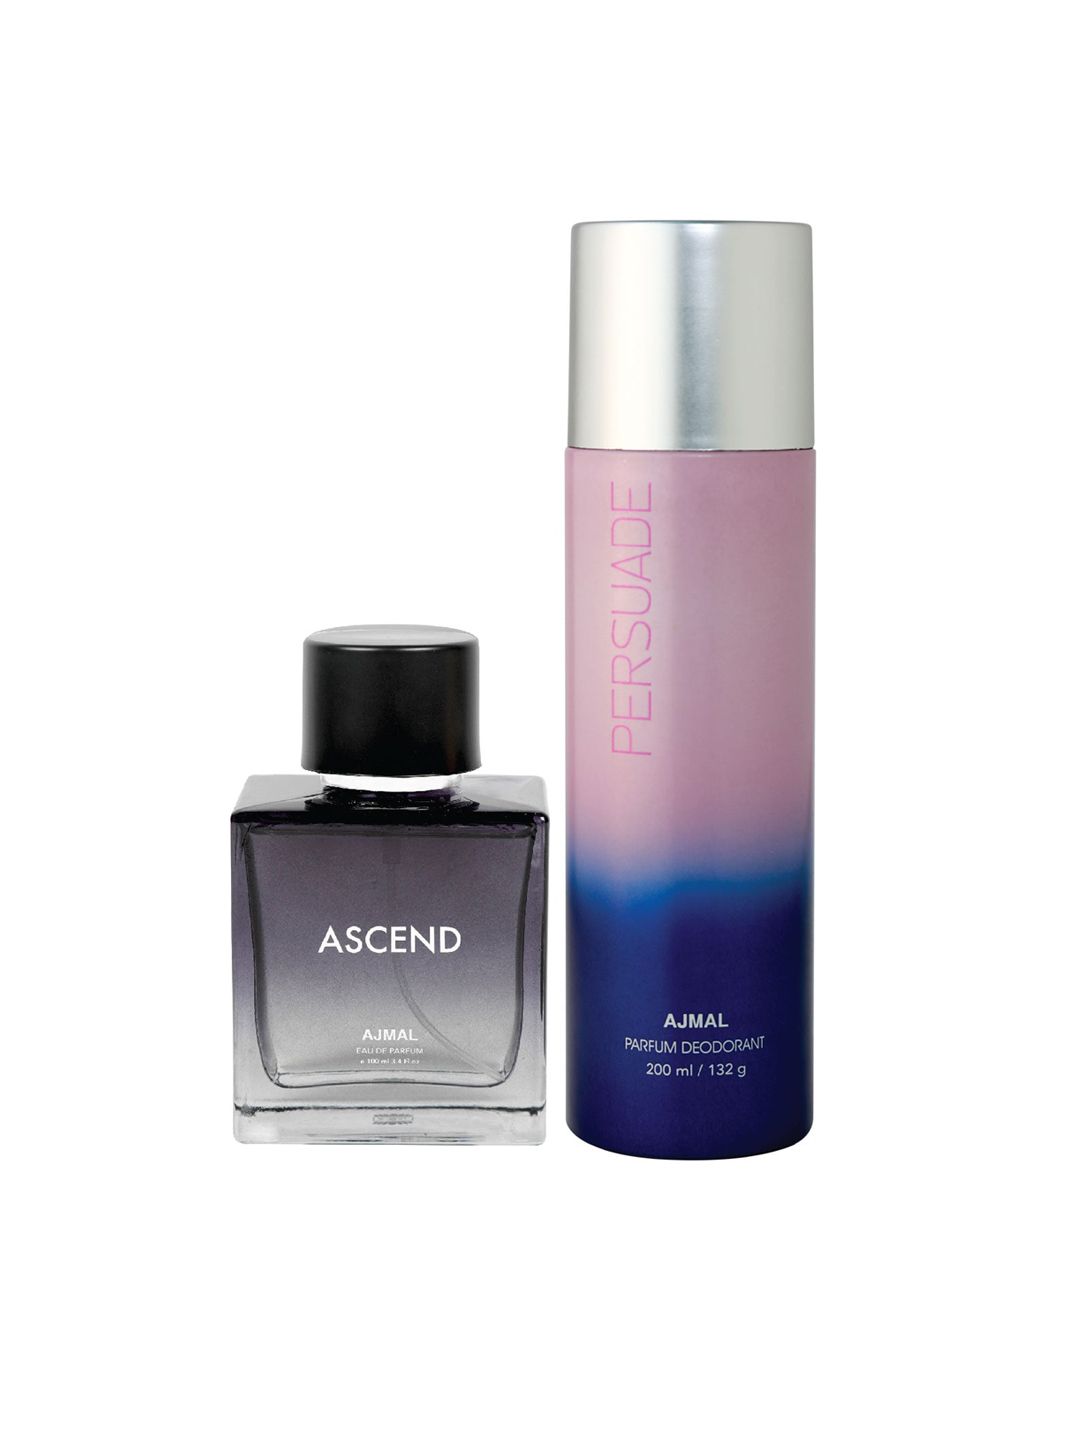 Ajmal Unisex Set of 2 Ascend EDP Perfume Scent for Skin 100ml & Persuade Deodorant 200ml Price in India